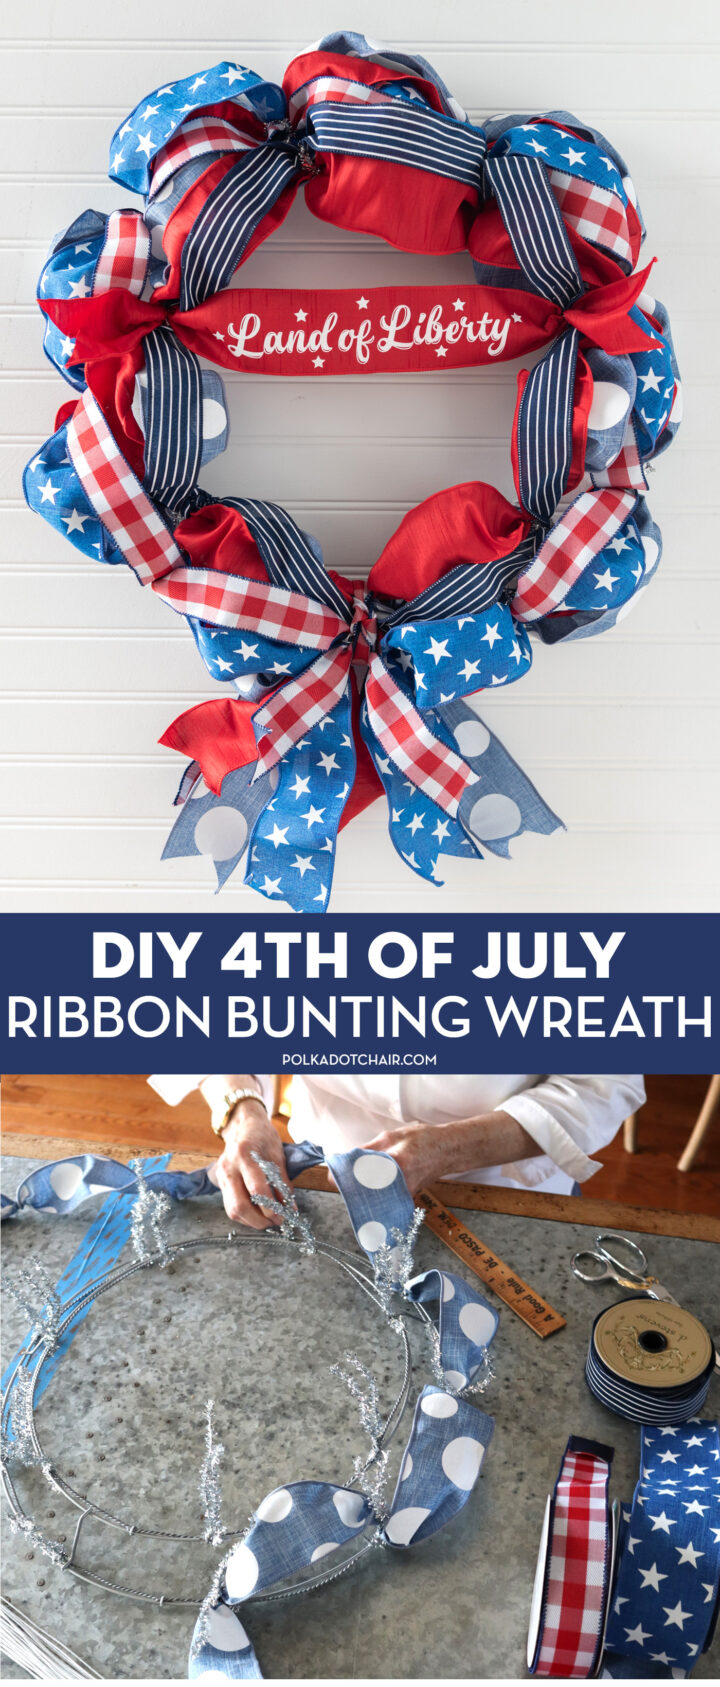 DIY 4th of July Ribbon Wreath | The Polka Dot Chair